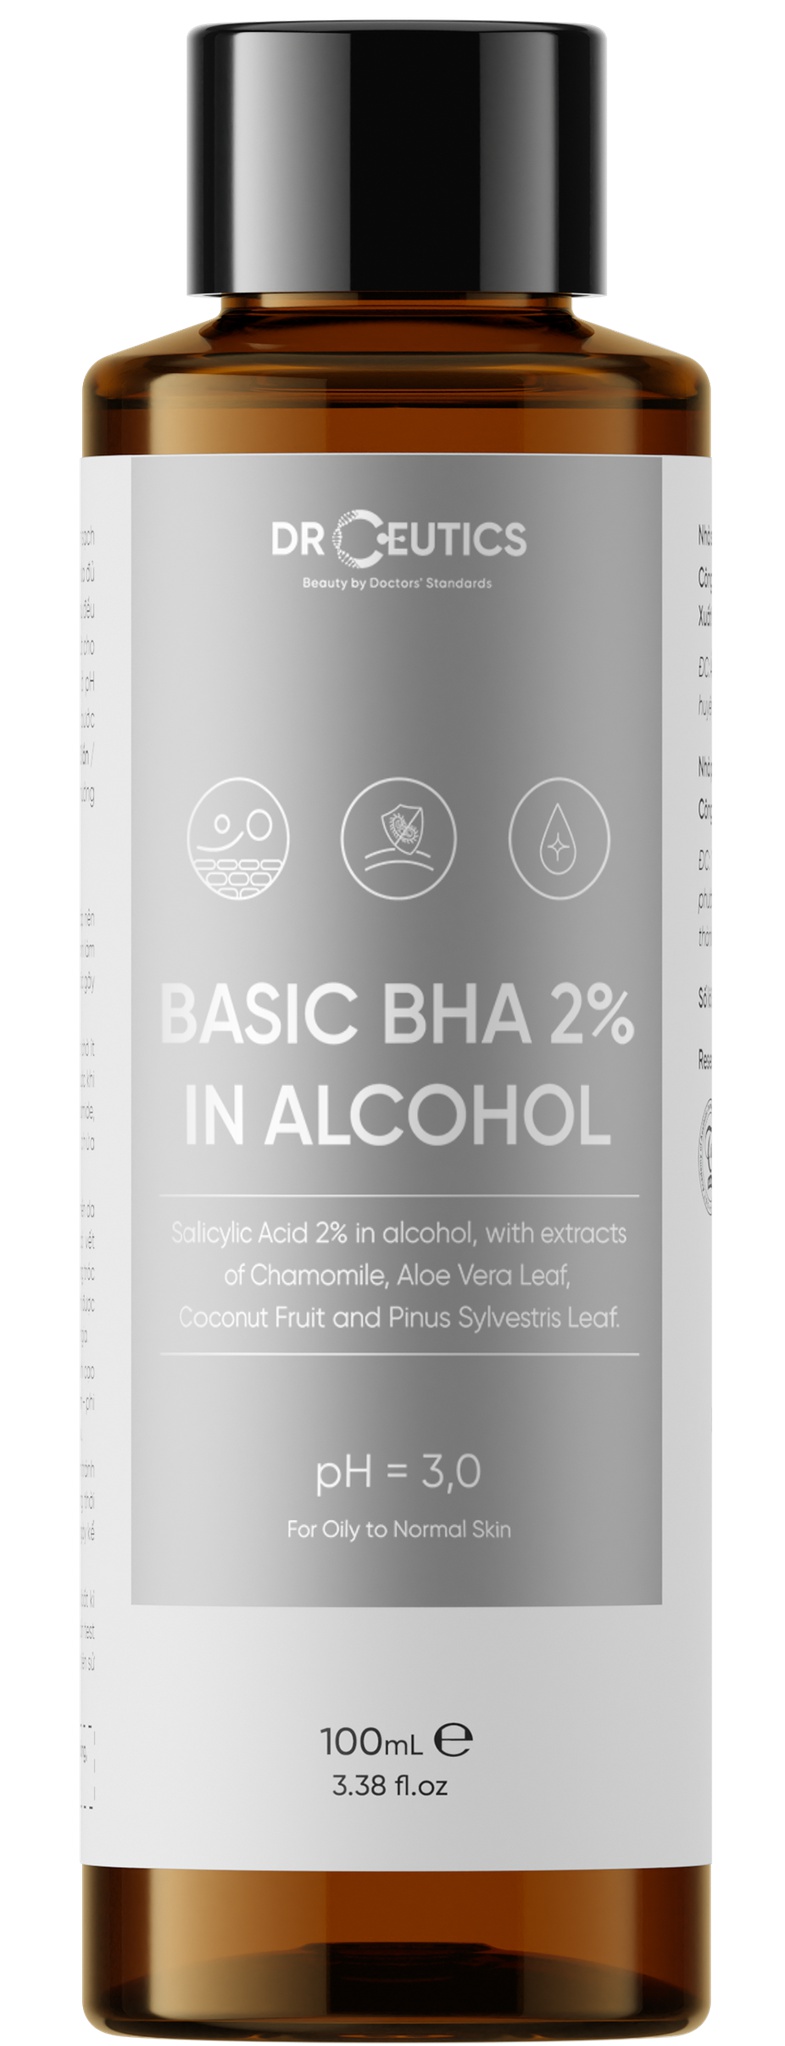 DrCeutics Basic BHA 2% In Alcohol